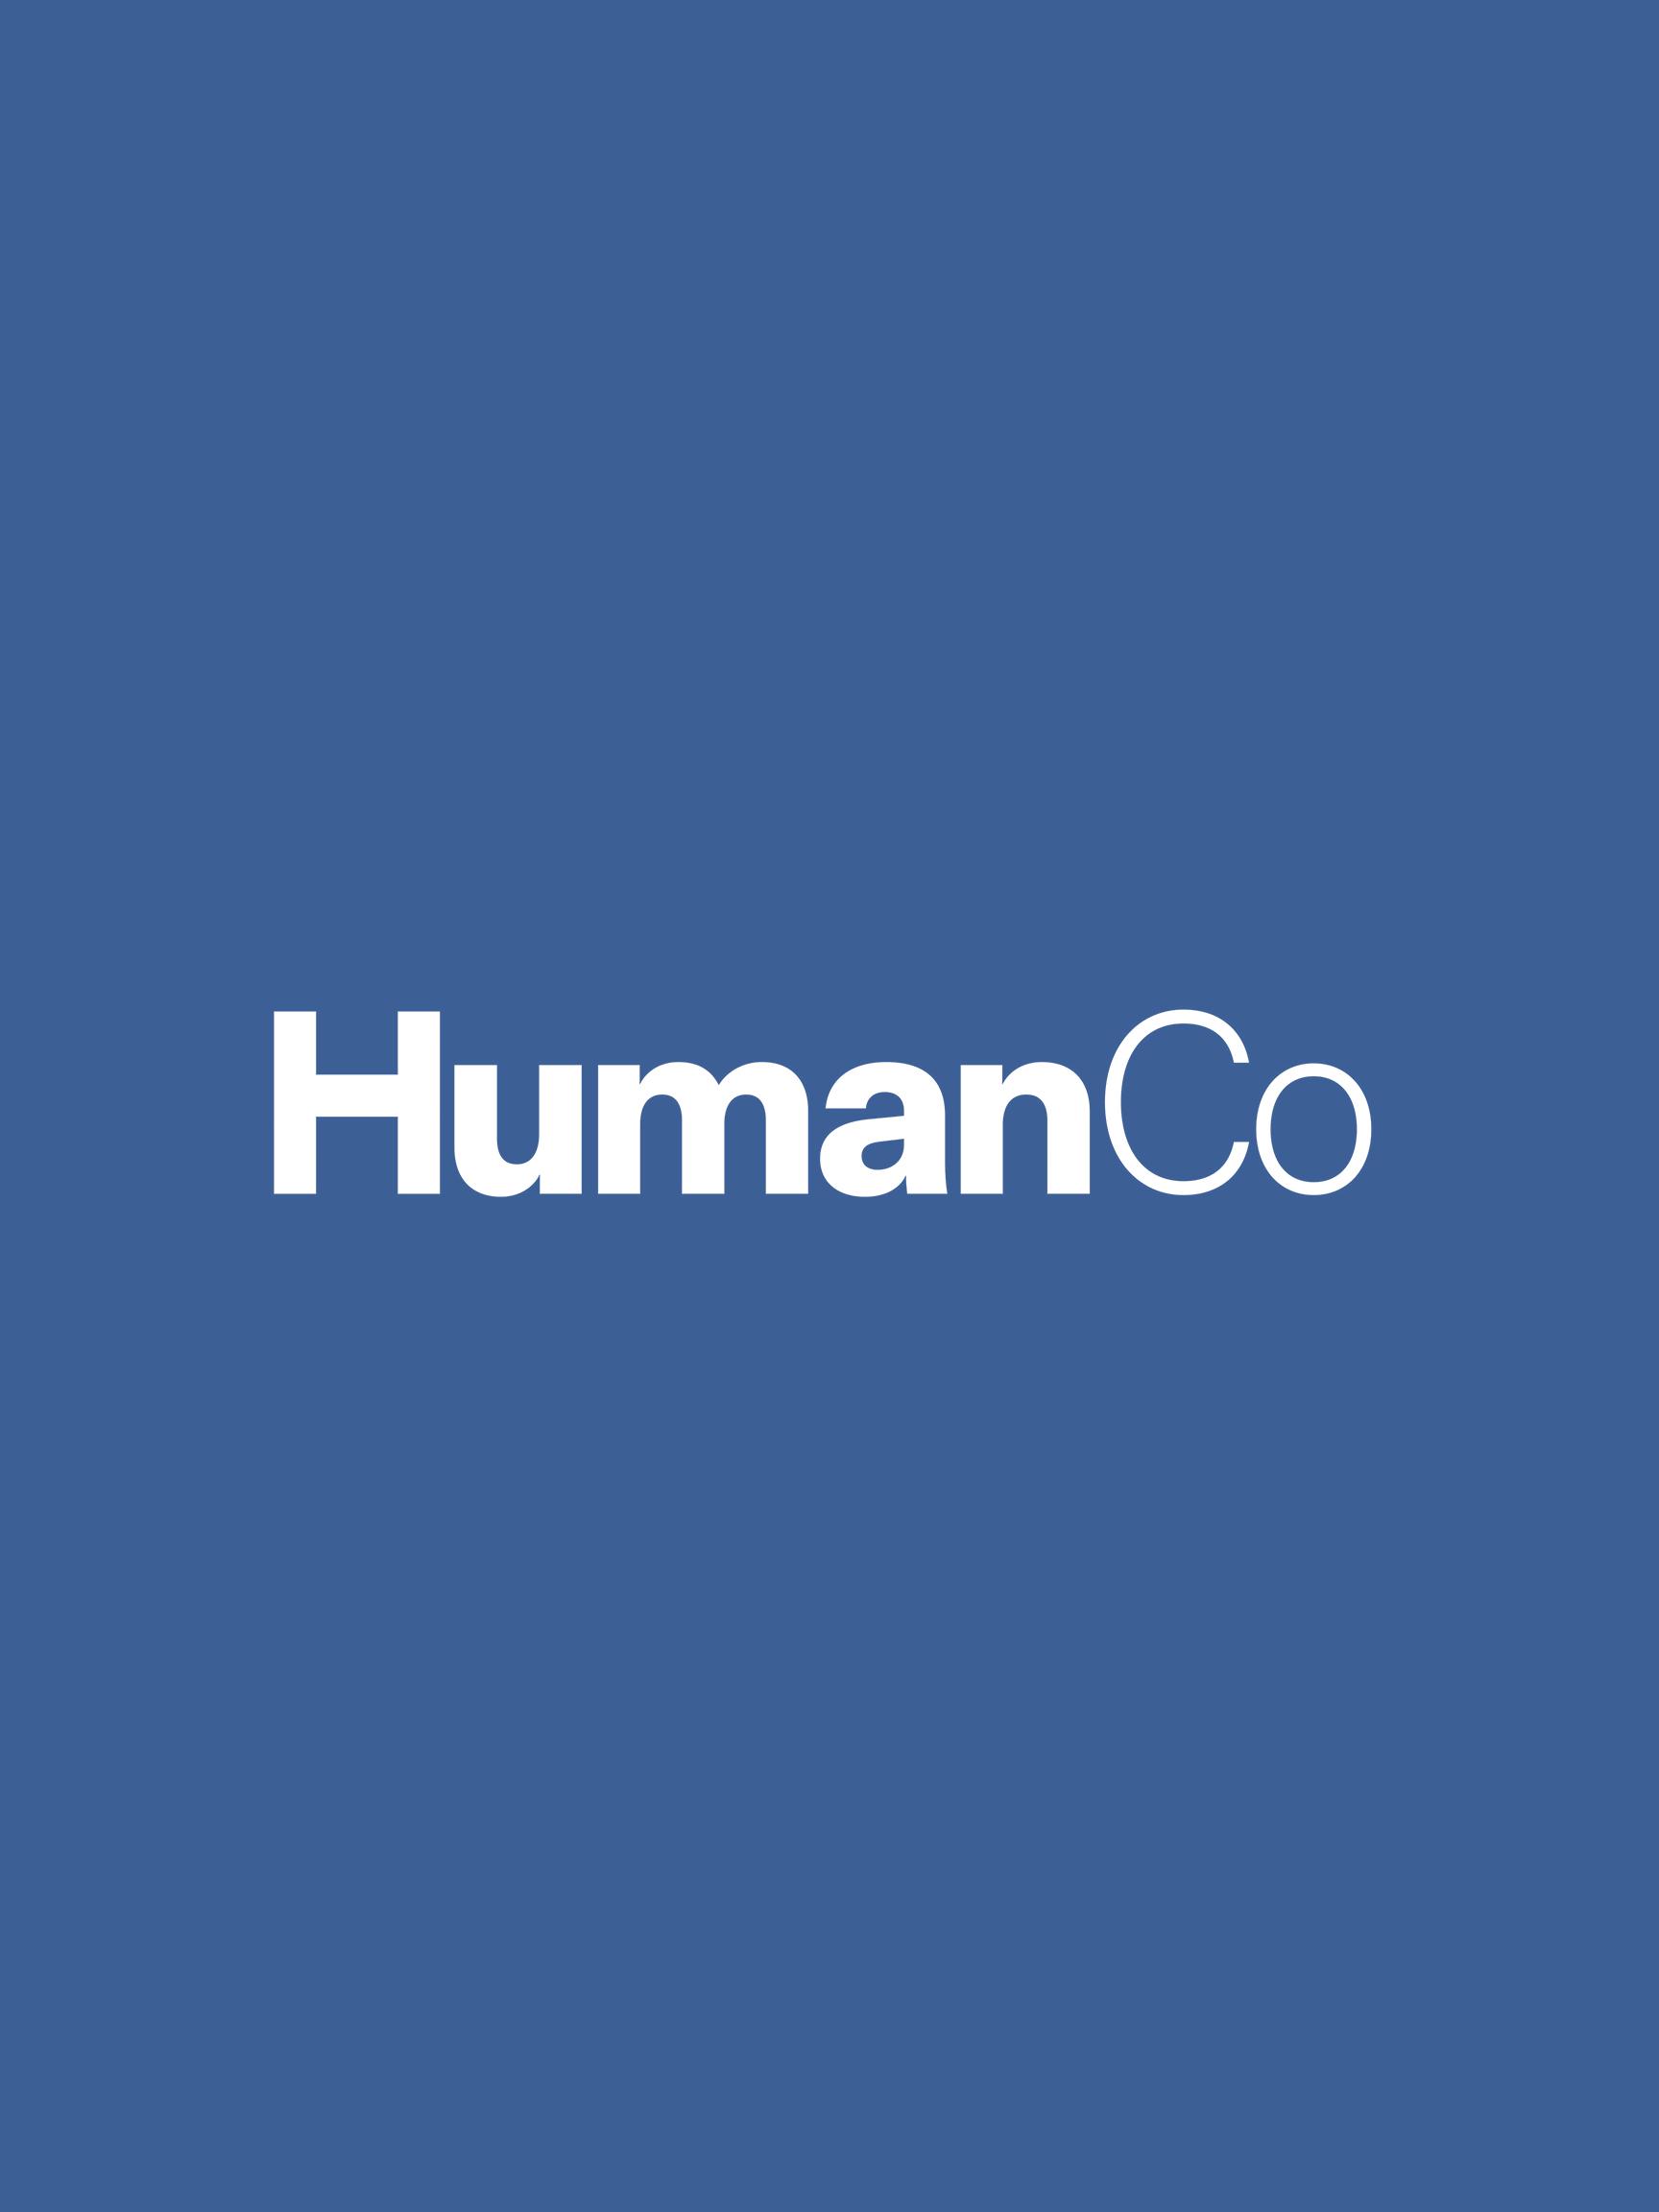 humanco logo 2x